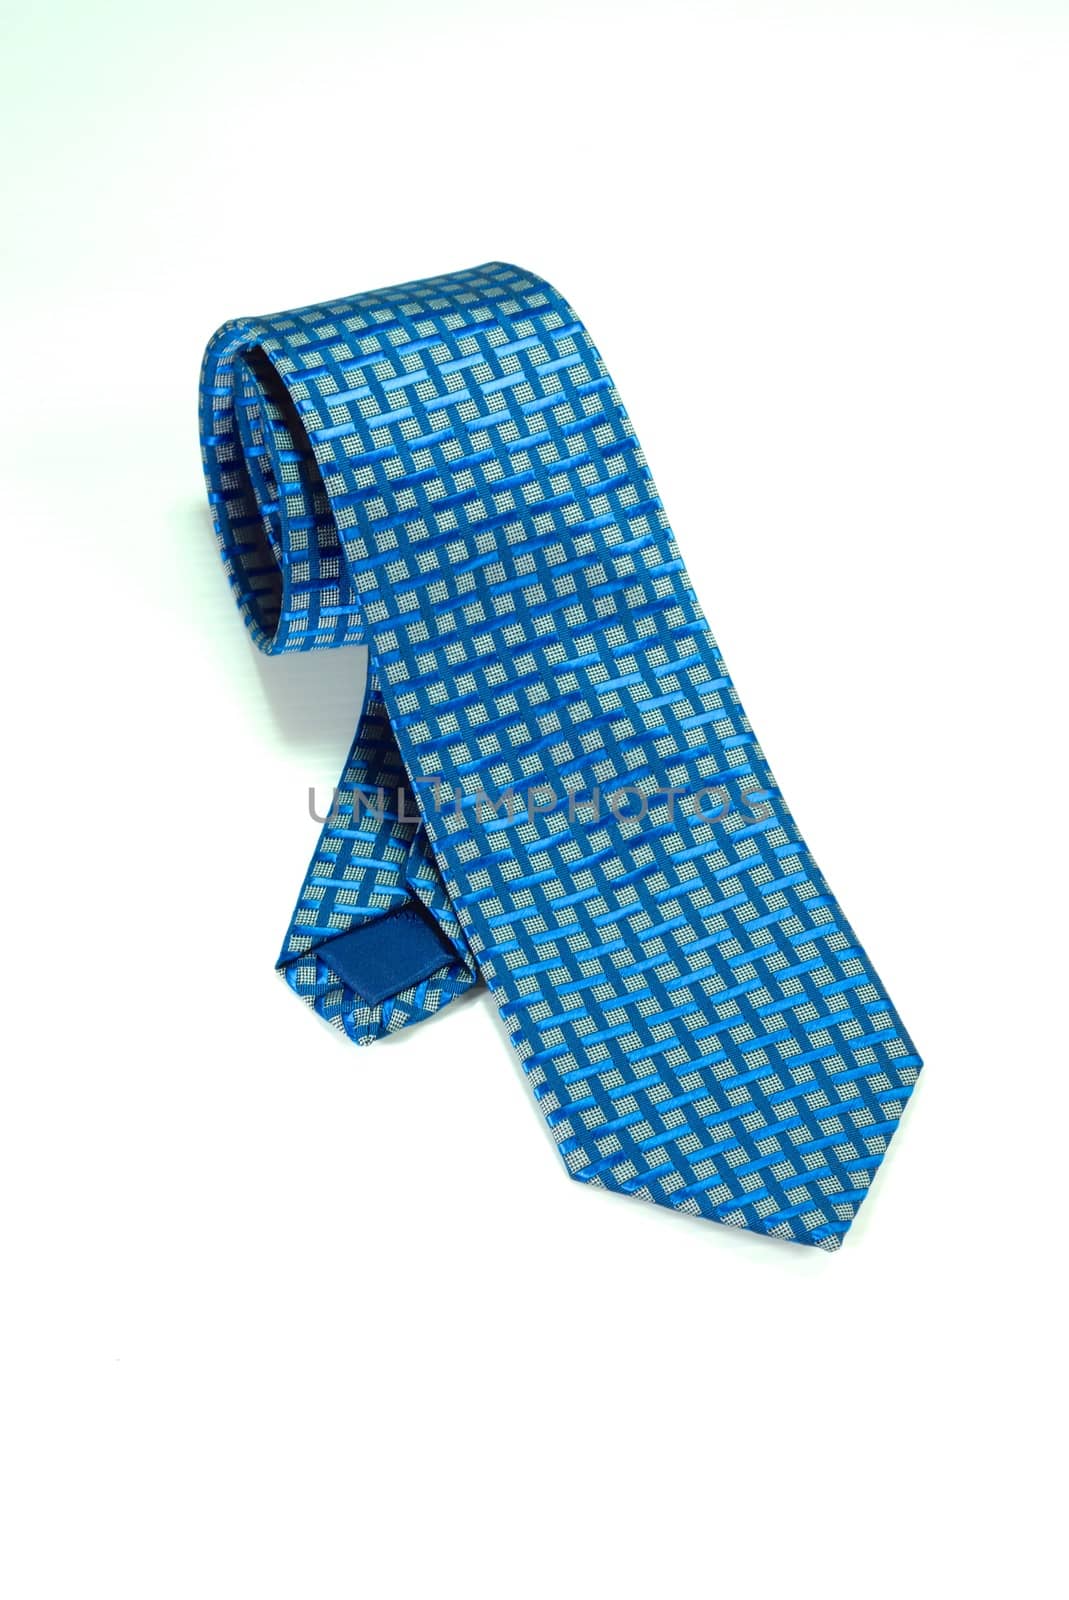 necktie by nattapatt